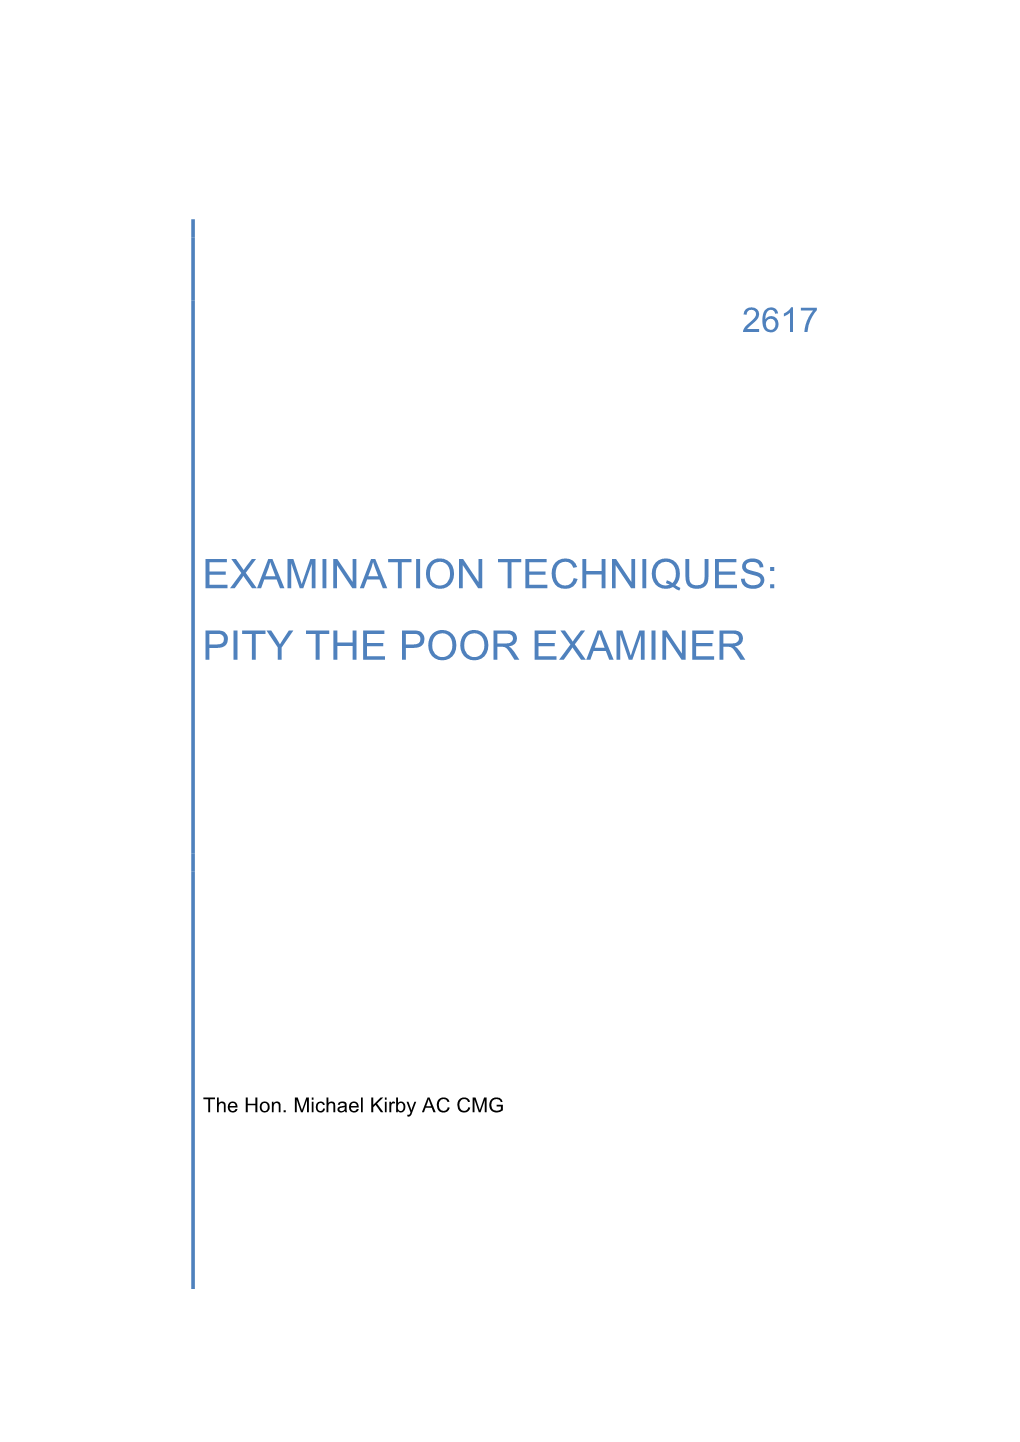 Examination Techniques: Pity the Poor Examiner